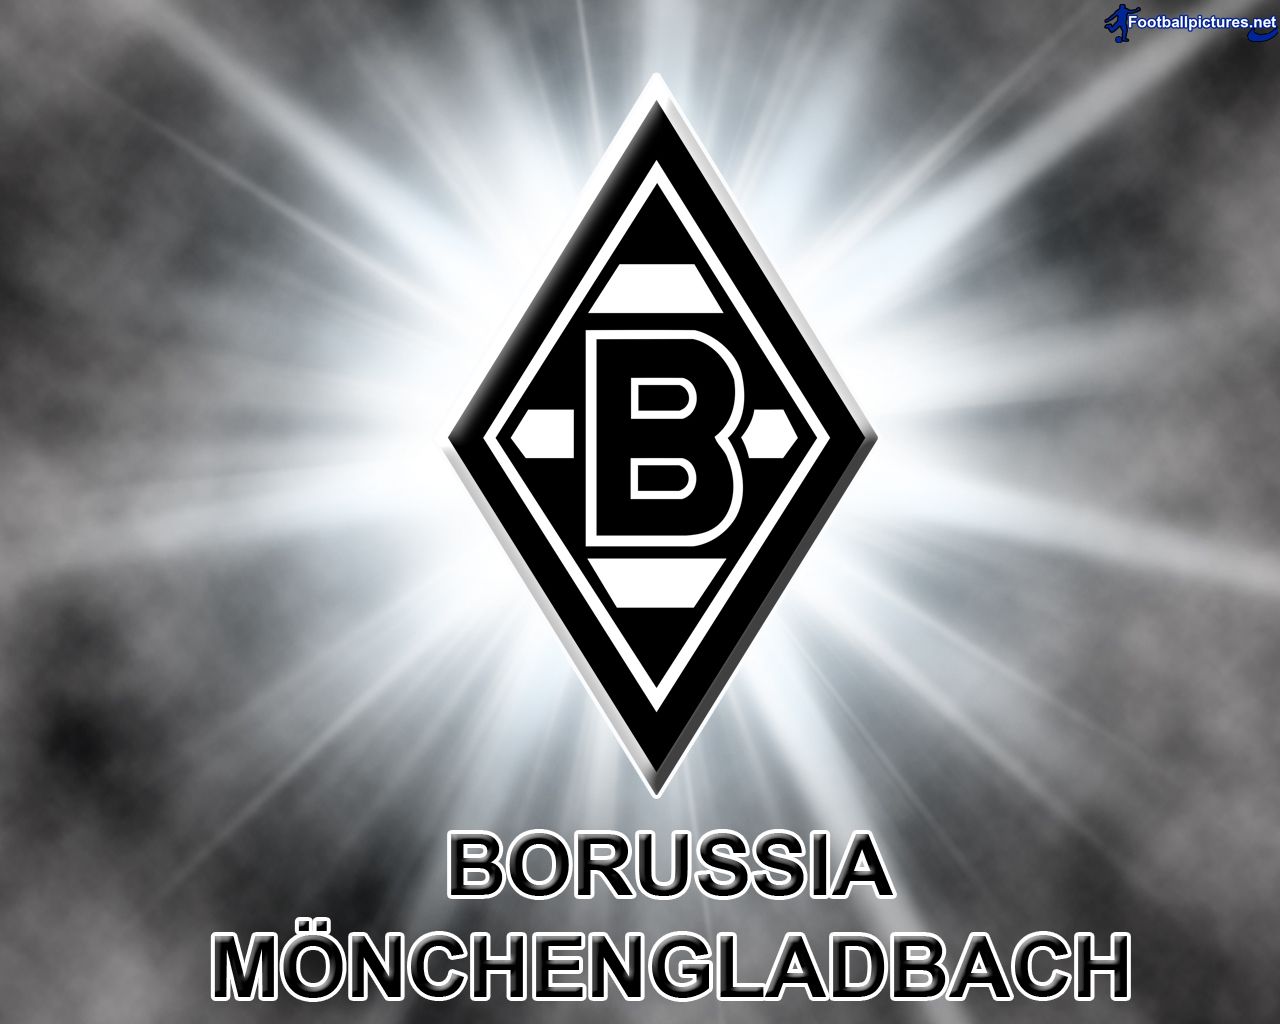 Borussia Monchengladbach Pictures Football Wallpaper And Photos